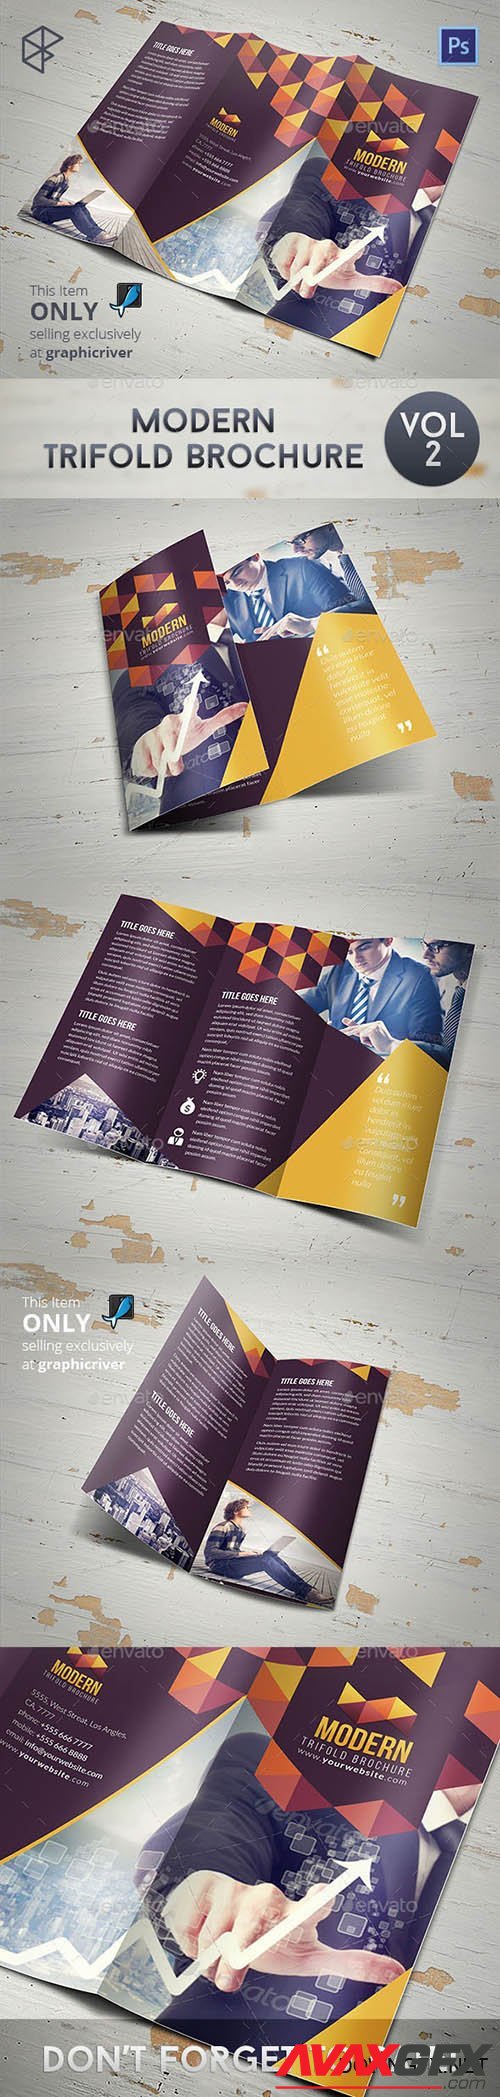 Graphicriver - Modern Trifold Brochure 7931244